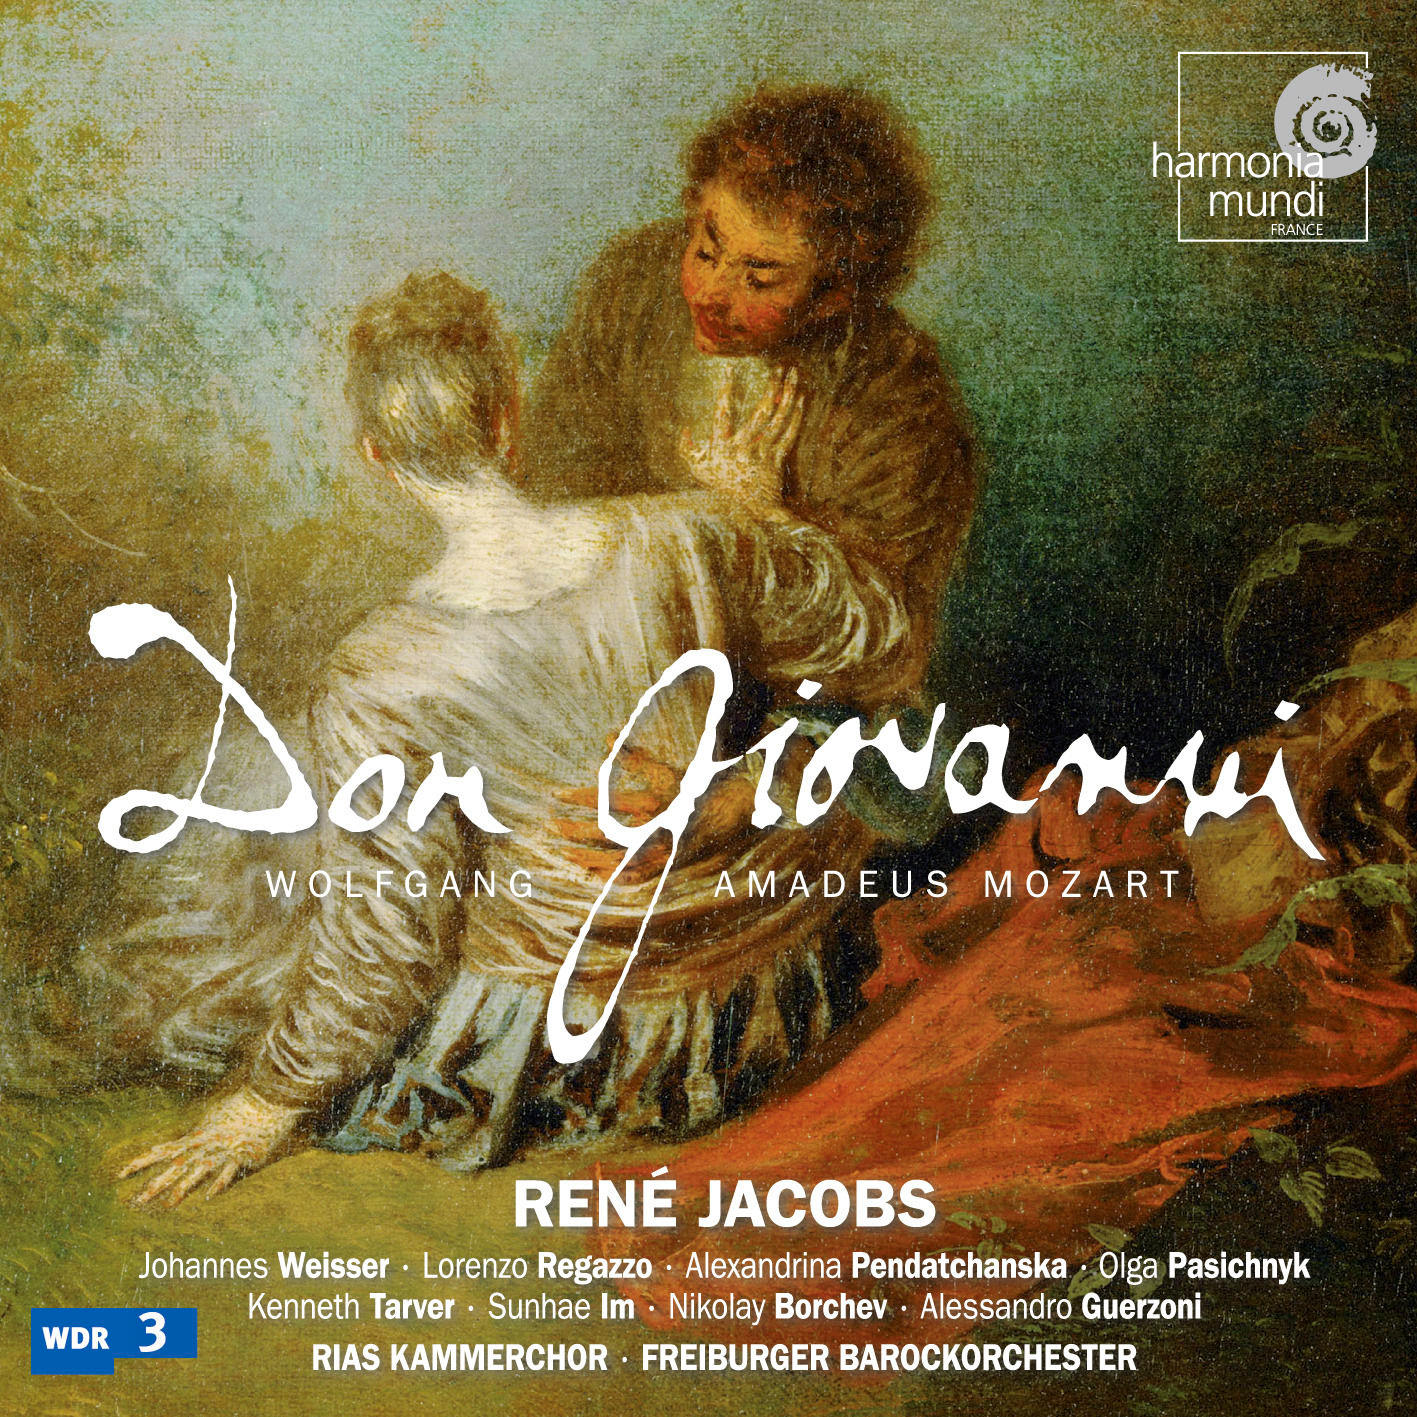 RIAS Kammerchor, Freiburger Barockorchester, Rene Jacobs – W.A. Mozart: Don Giovanni (2007) MCH SACD ISO + Hi-Res FLAC